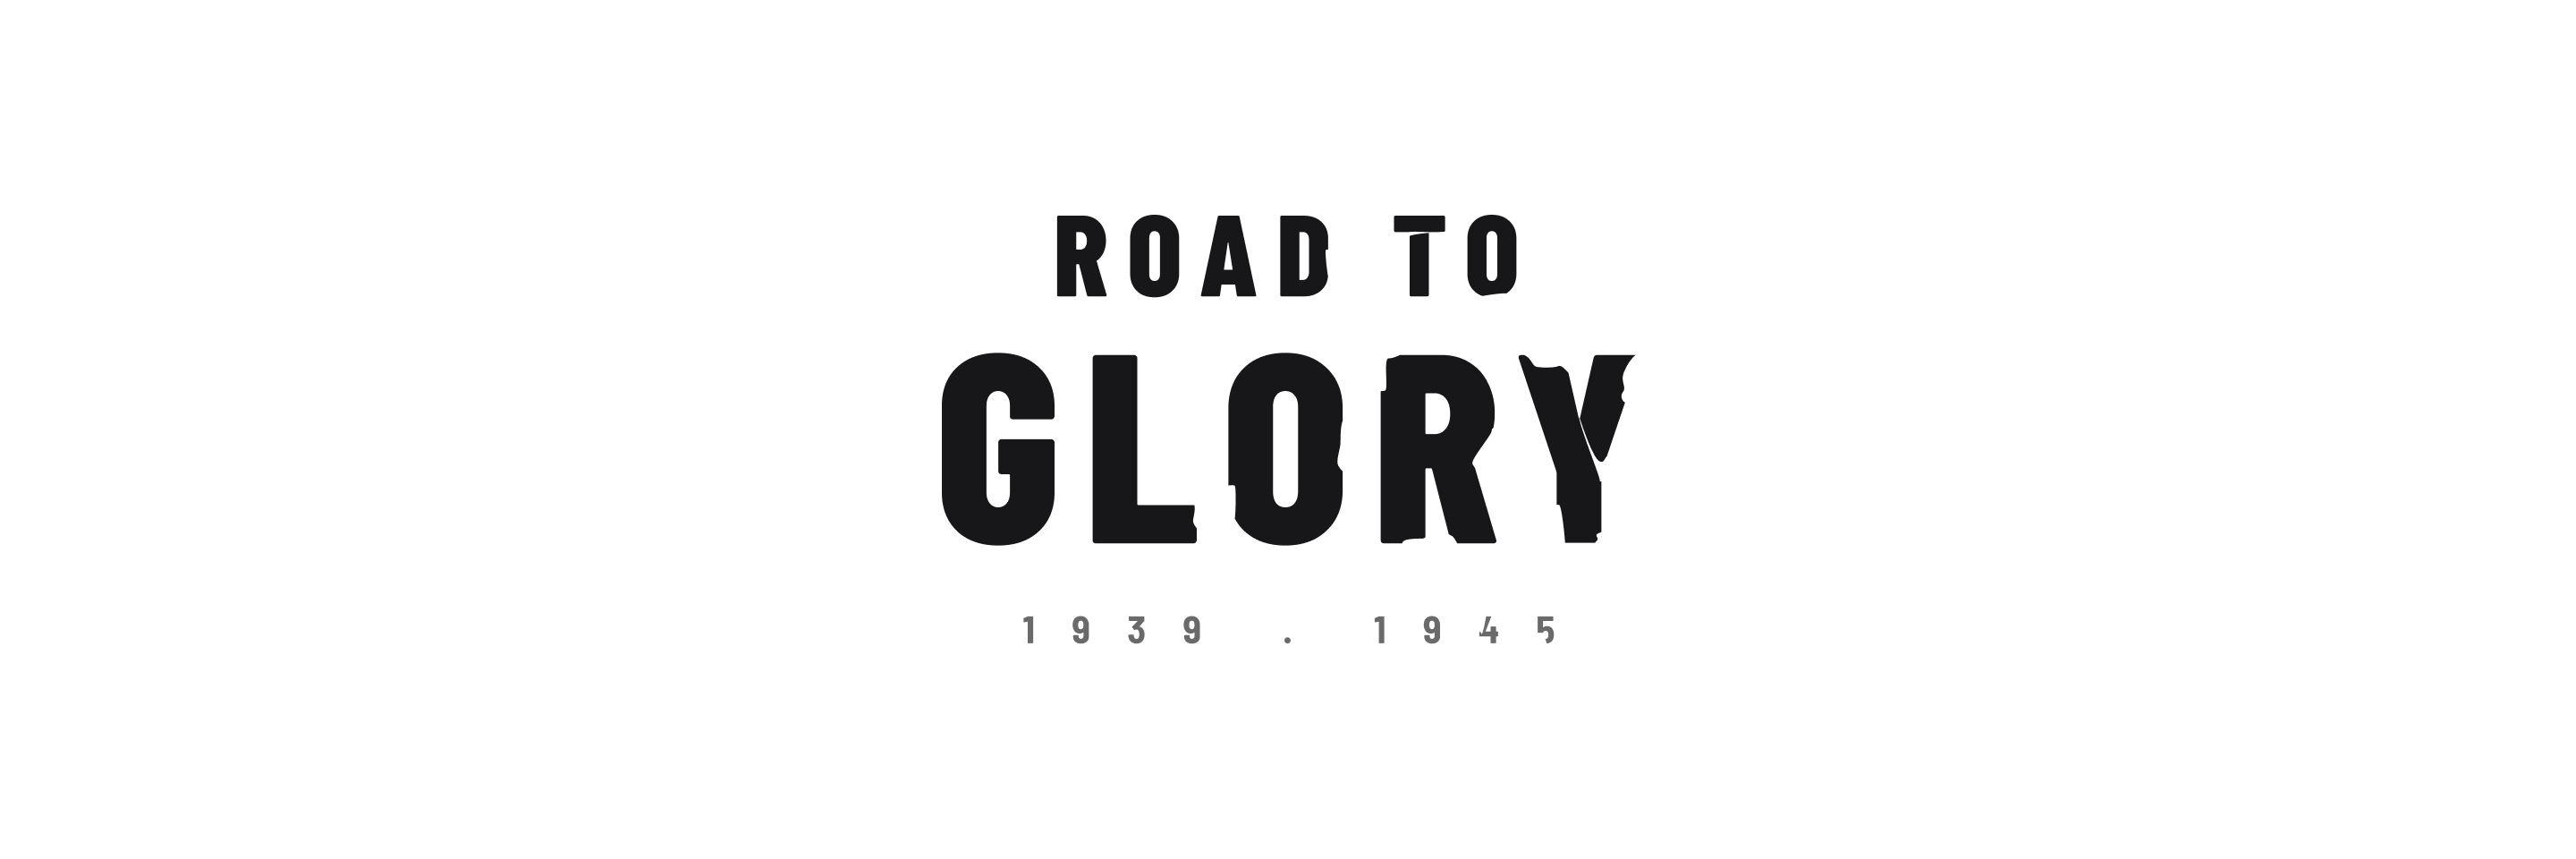 Road to Glory